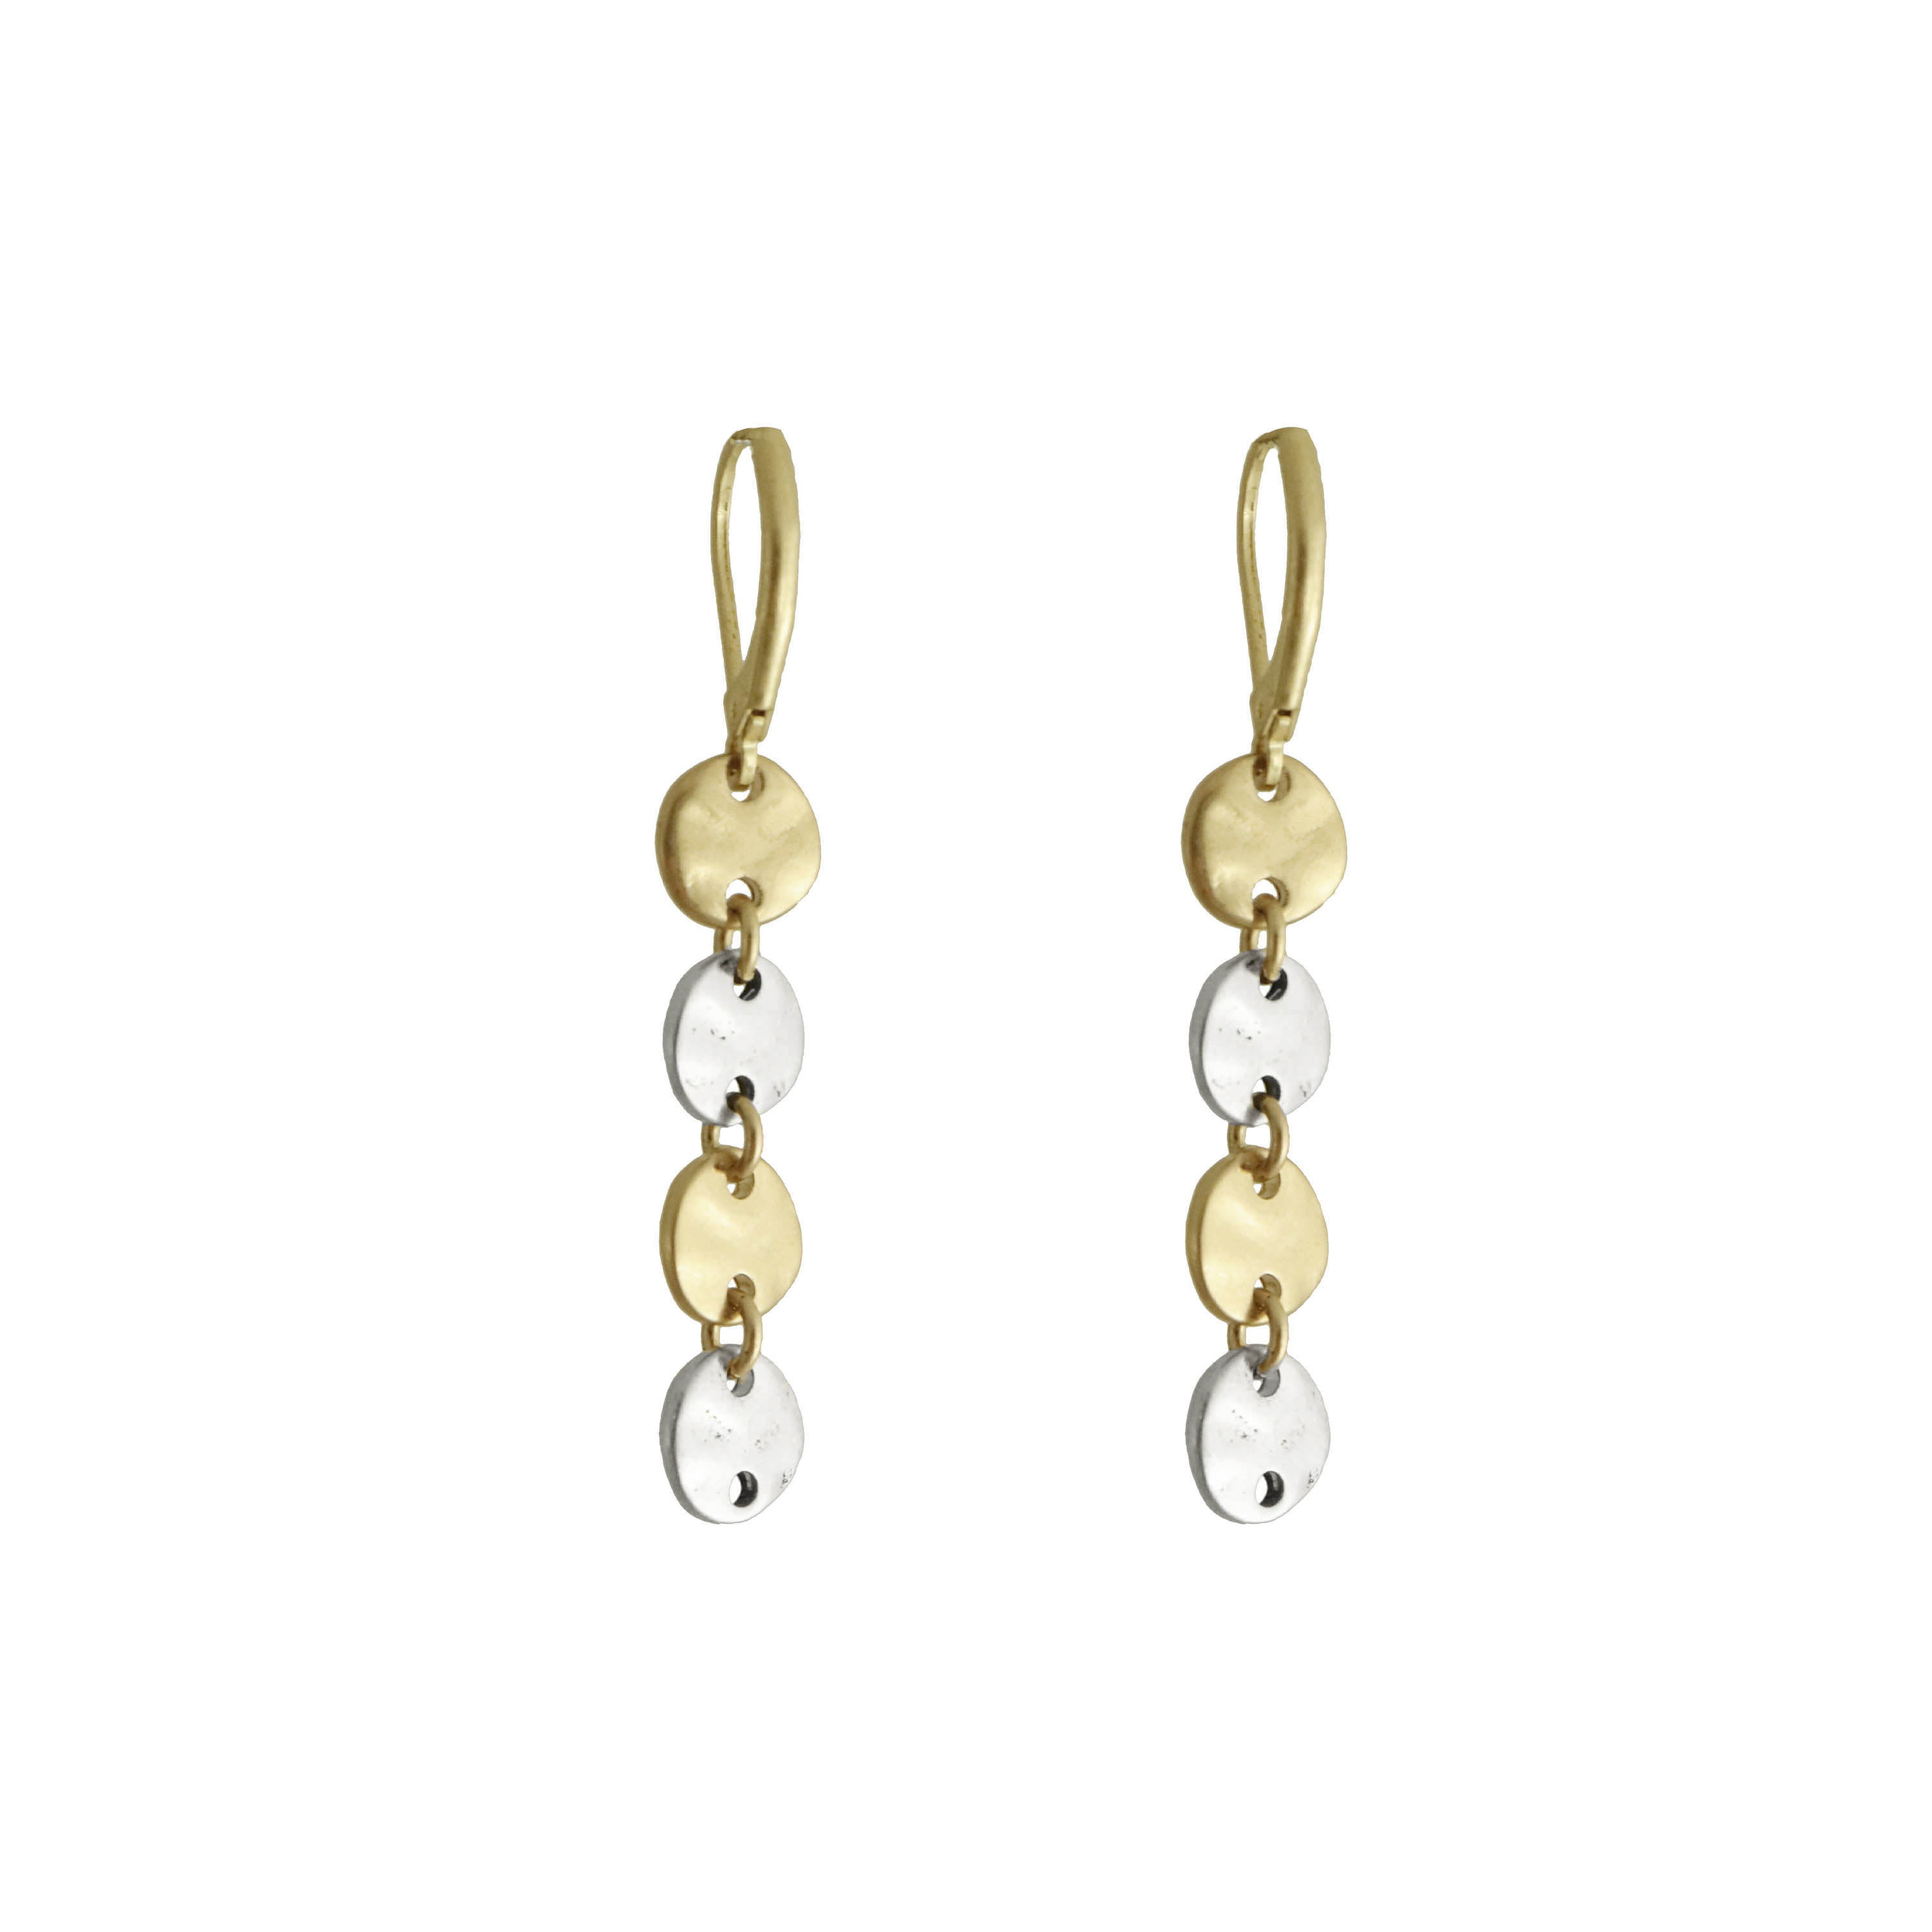 NEW Mixed Metal Silver & Gold Dangle Earrings|Minimalist Handmade Jewelry|Mothers Graduation Anniversary Hammered Gift|CareKit FREE SHIPPING